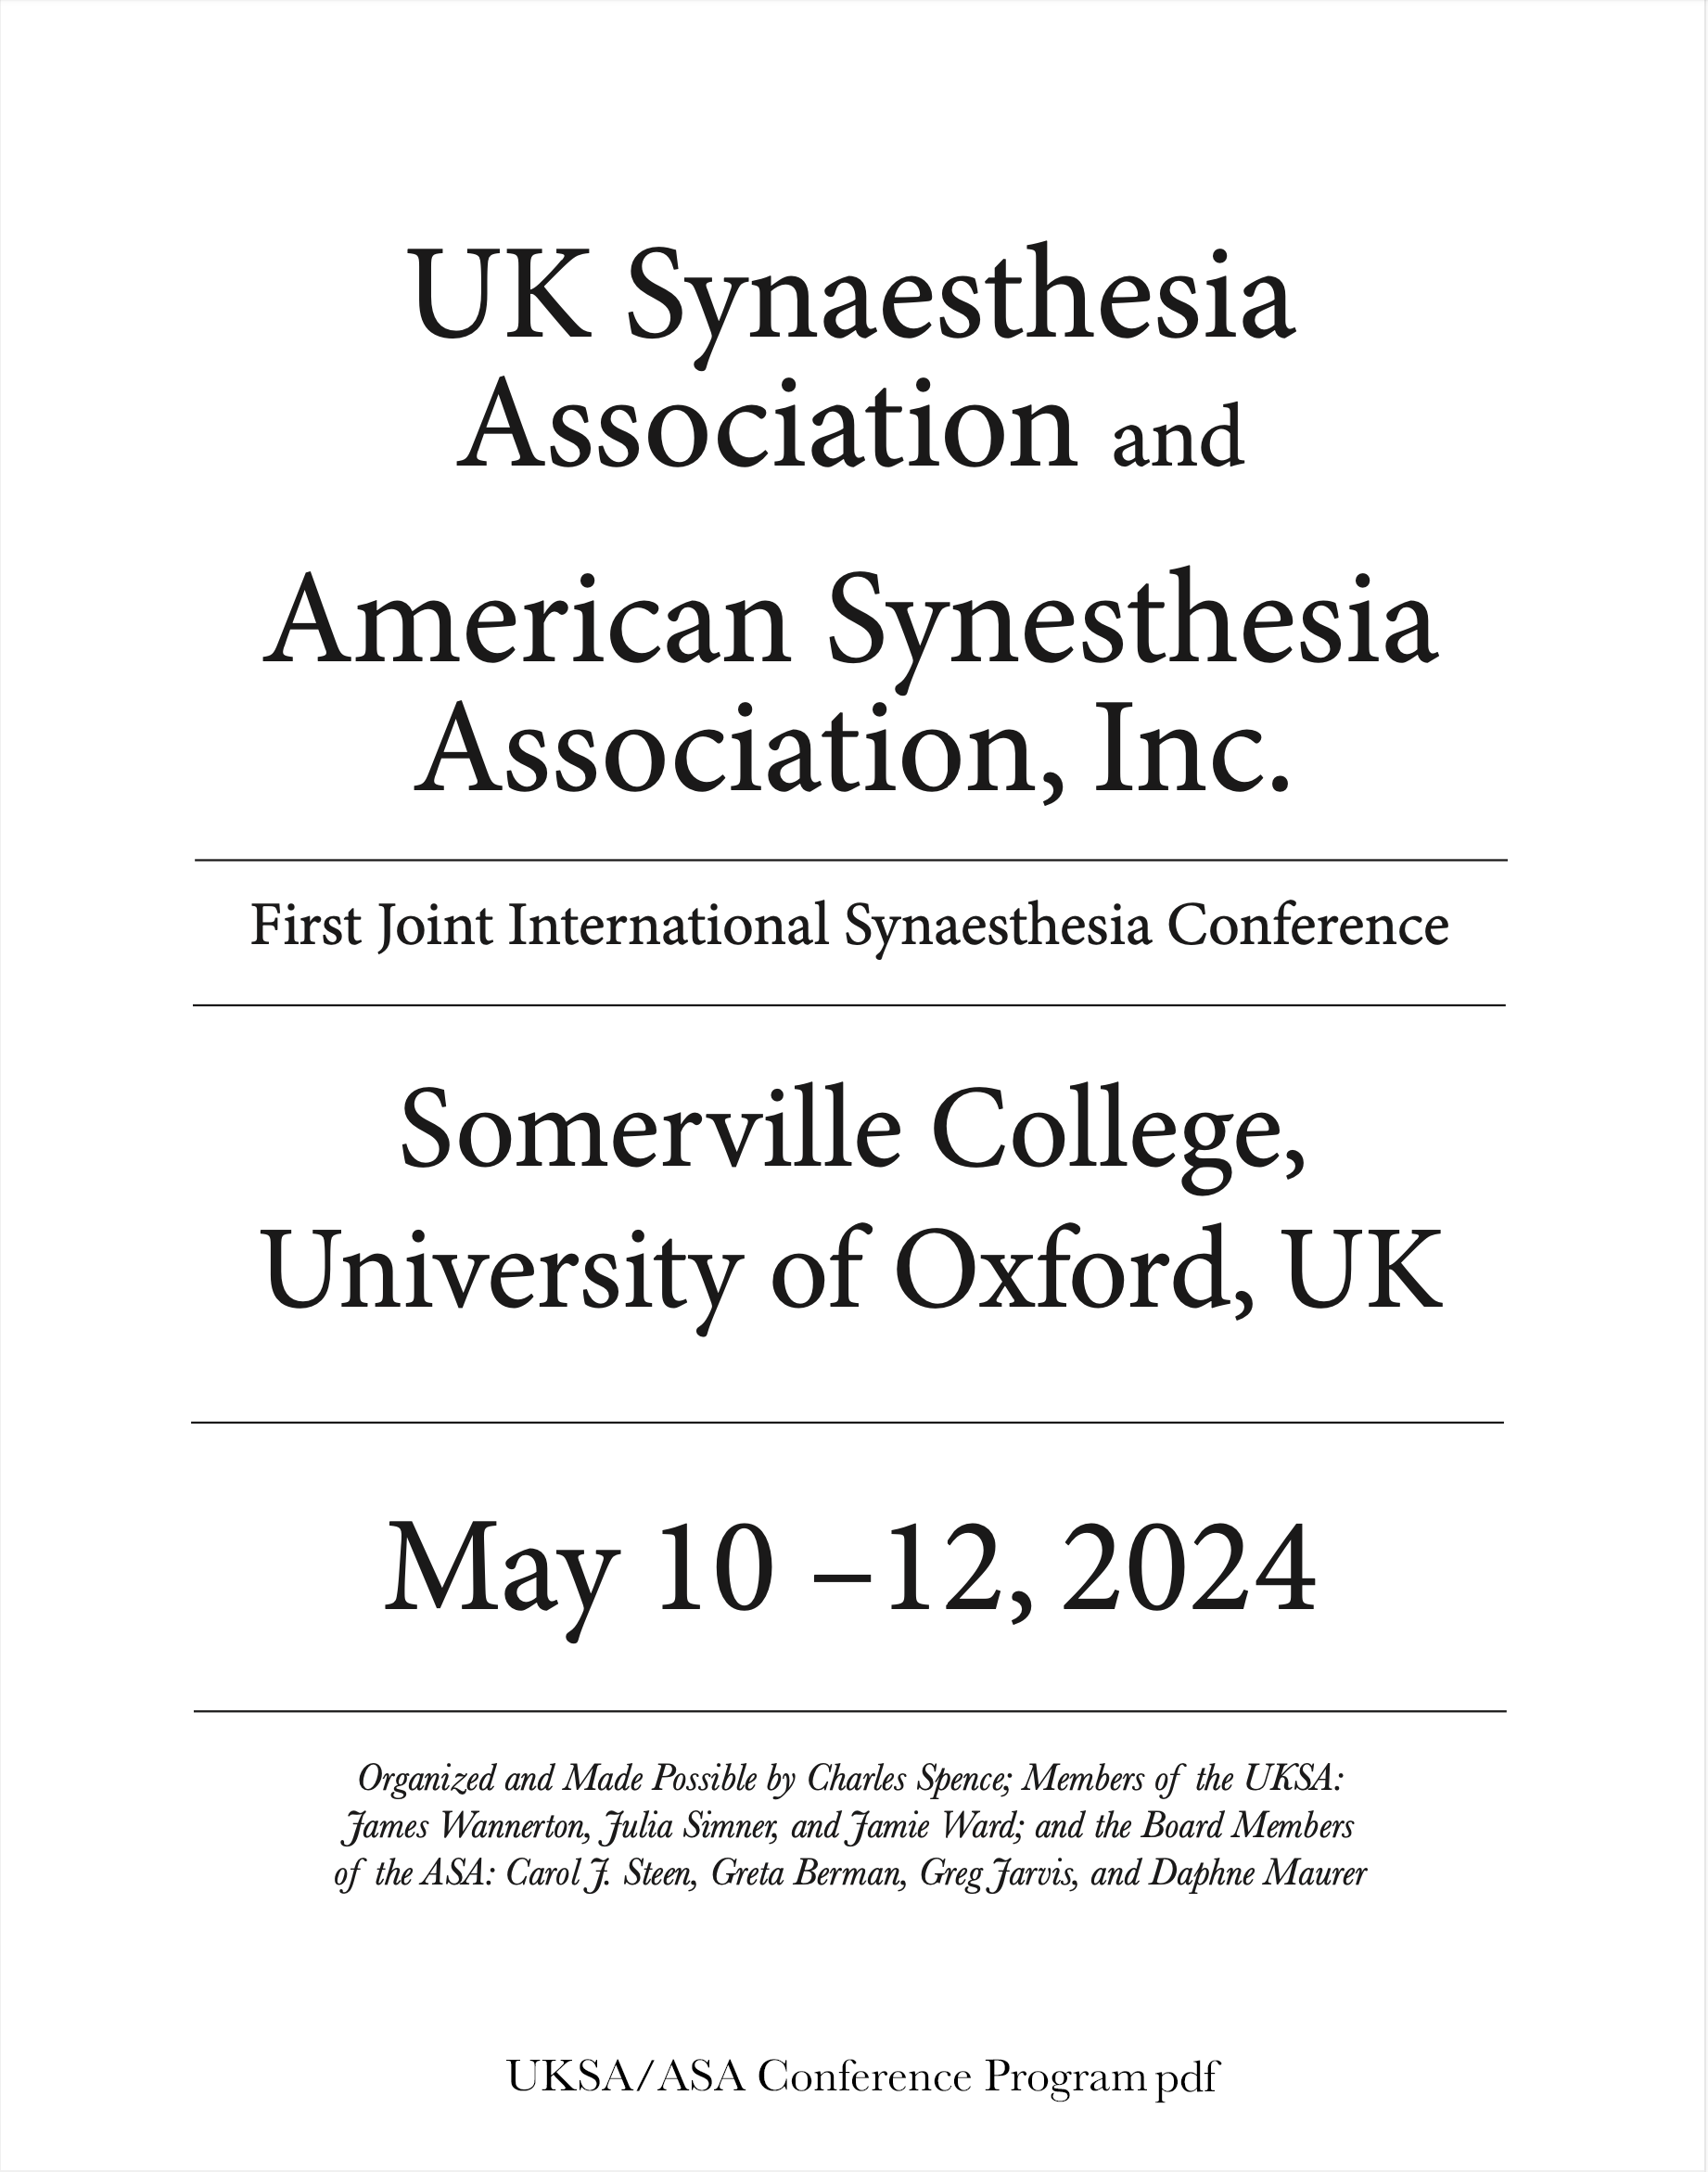 UKSA/ASA Conference Program v2.pdf